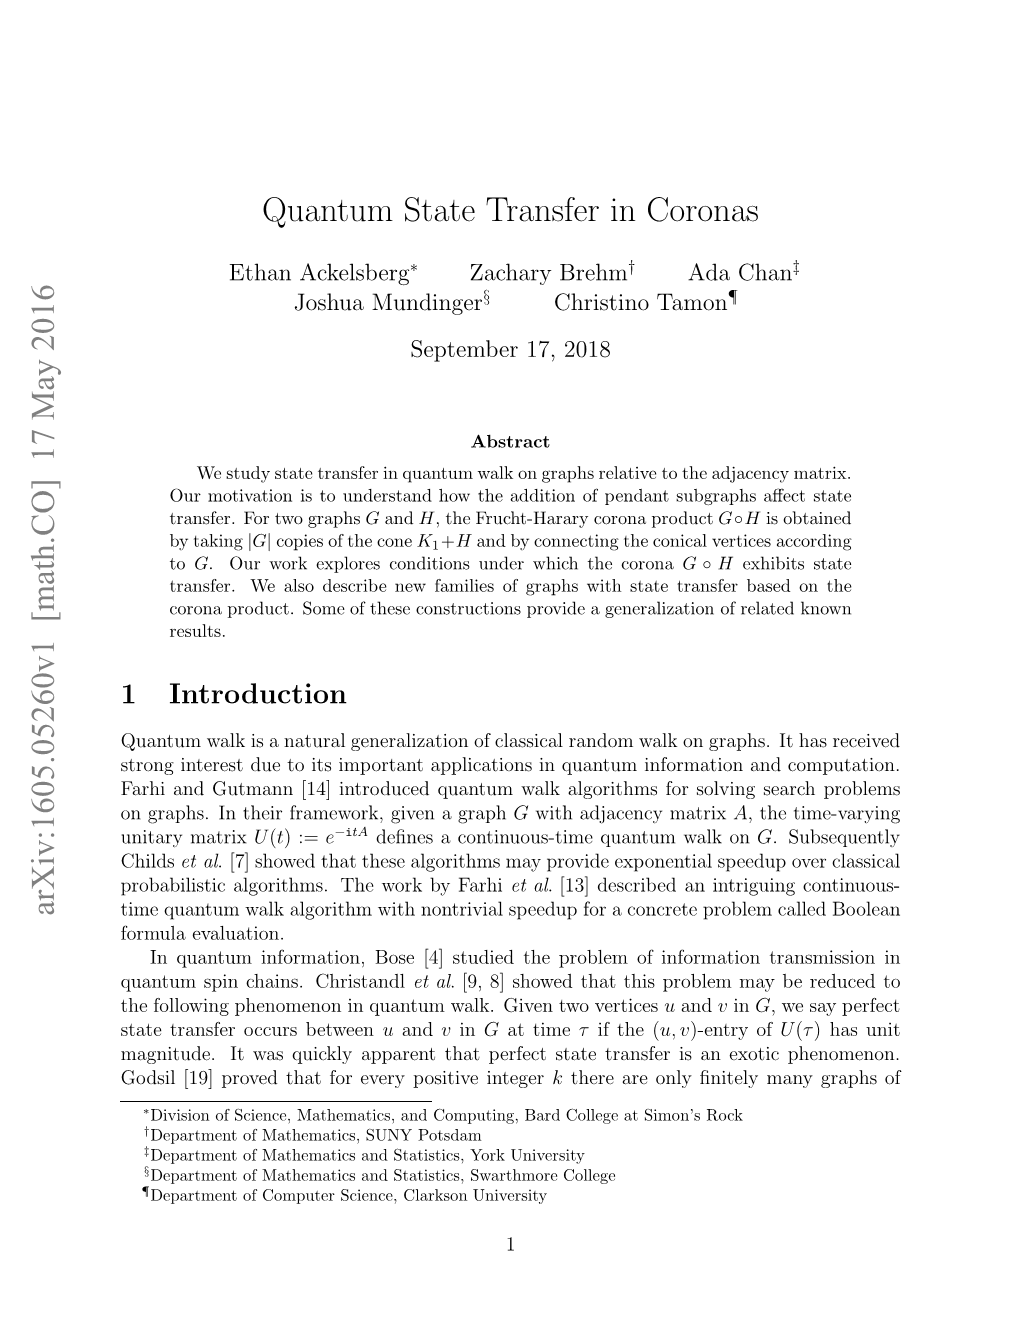 Quantum State Transfer on Coronas